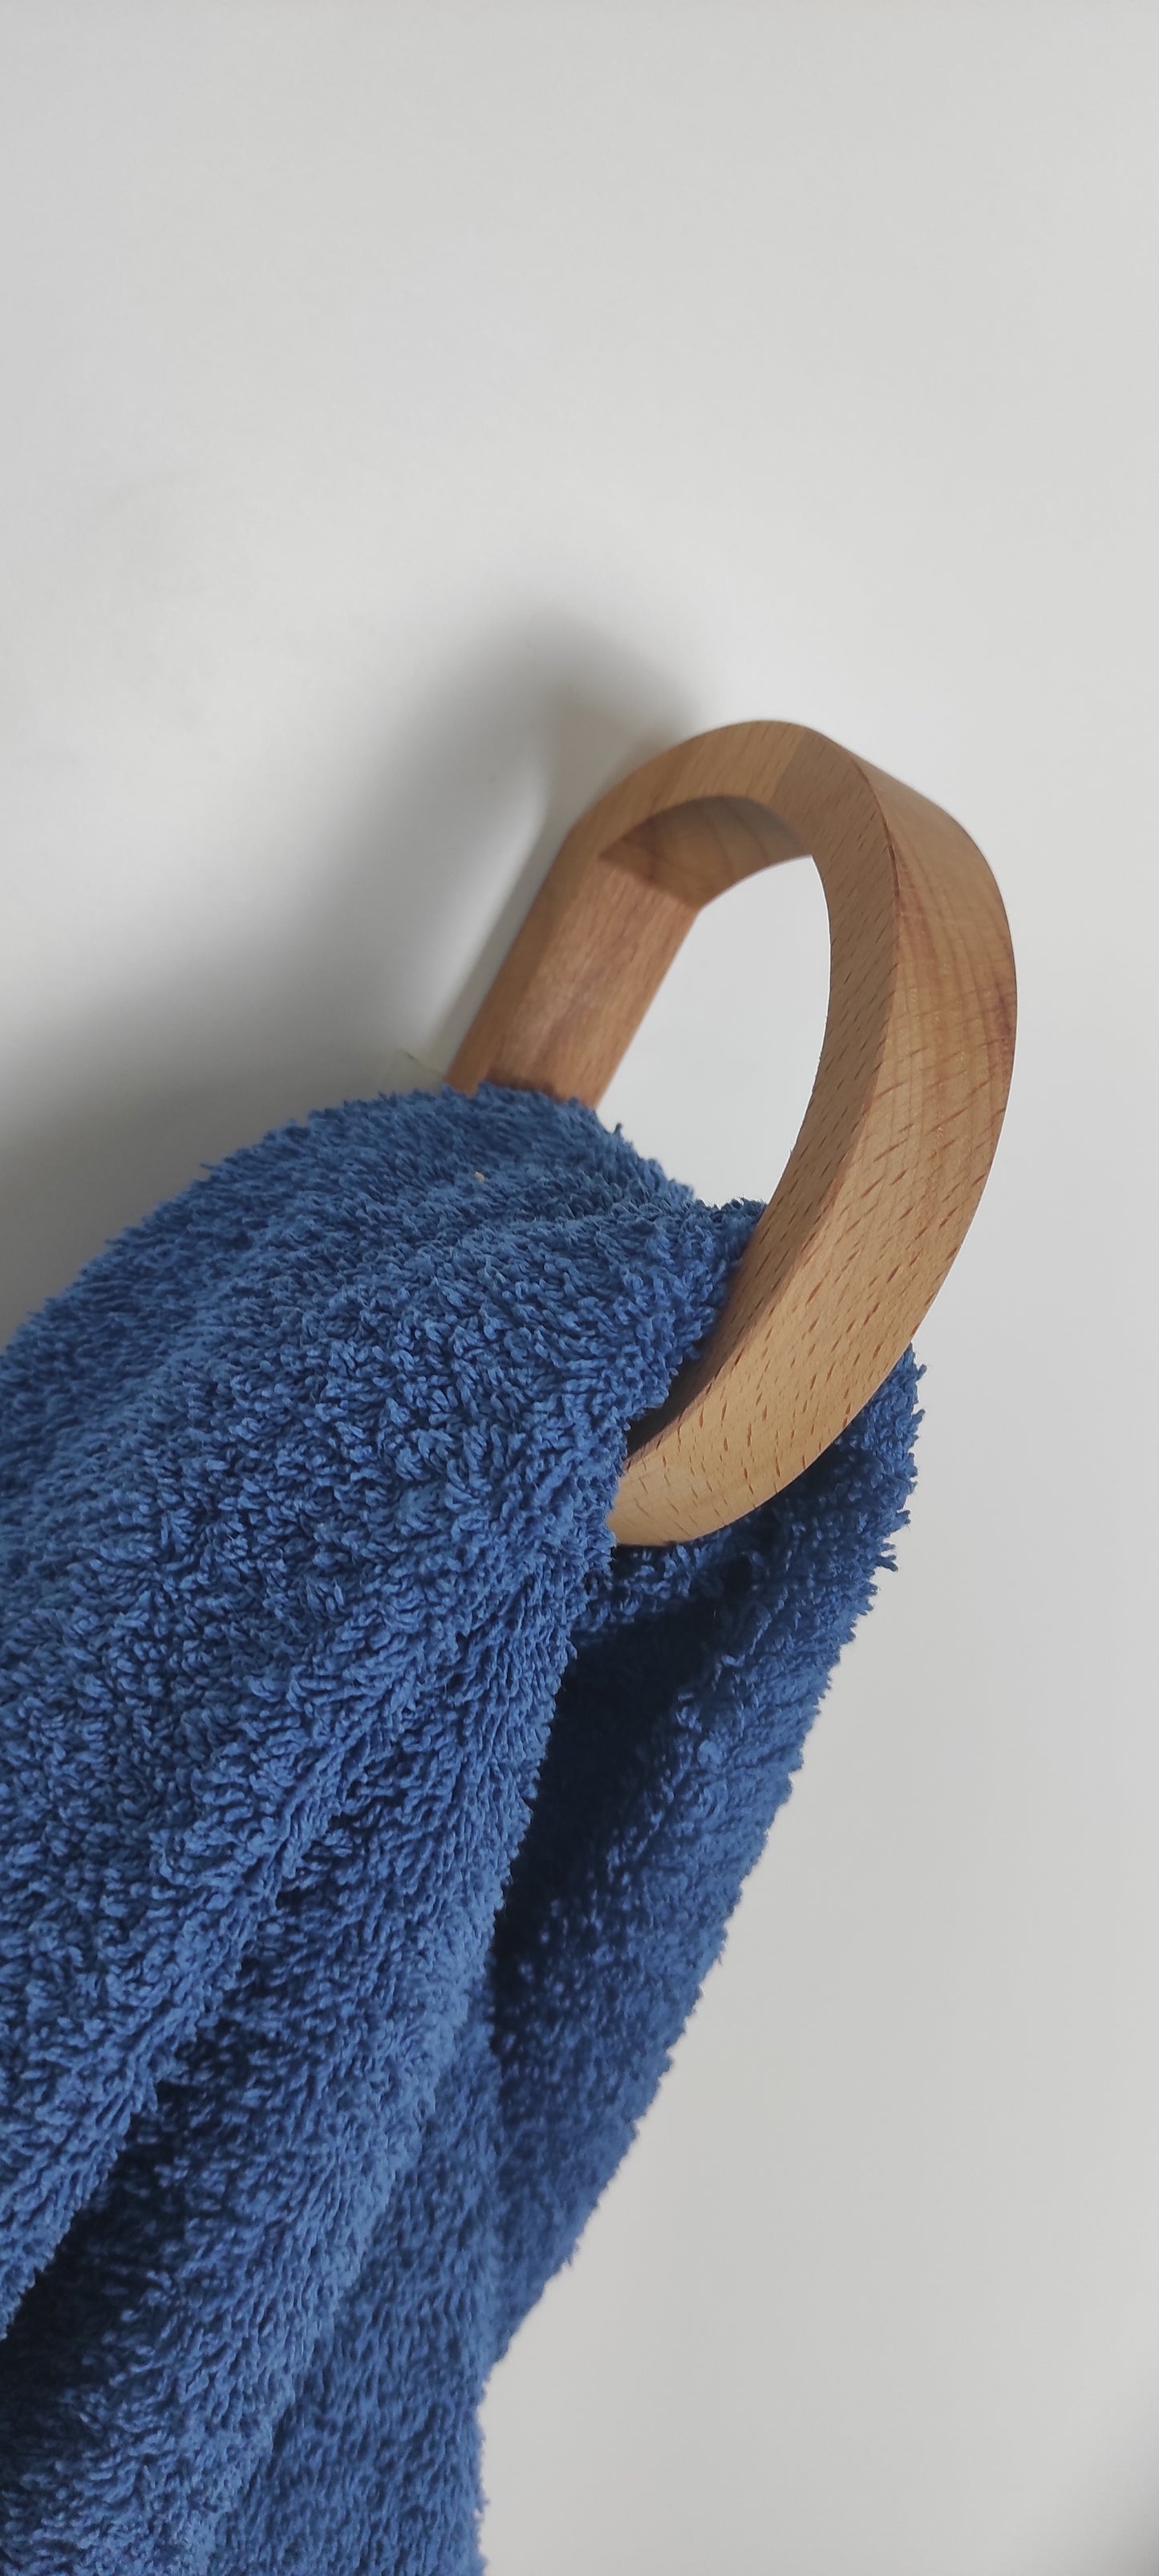 Handtuchring, Handtuchhalter aus Holz